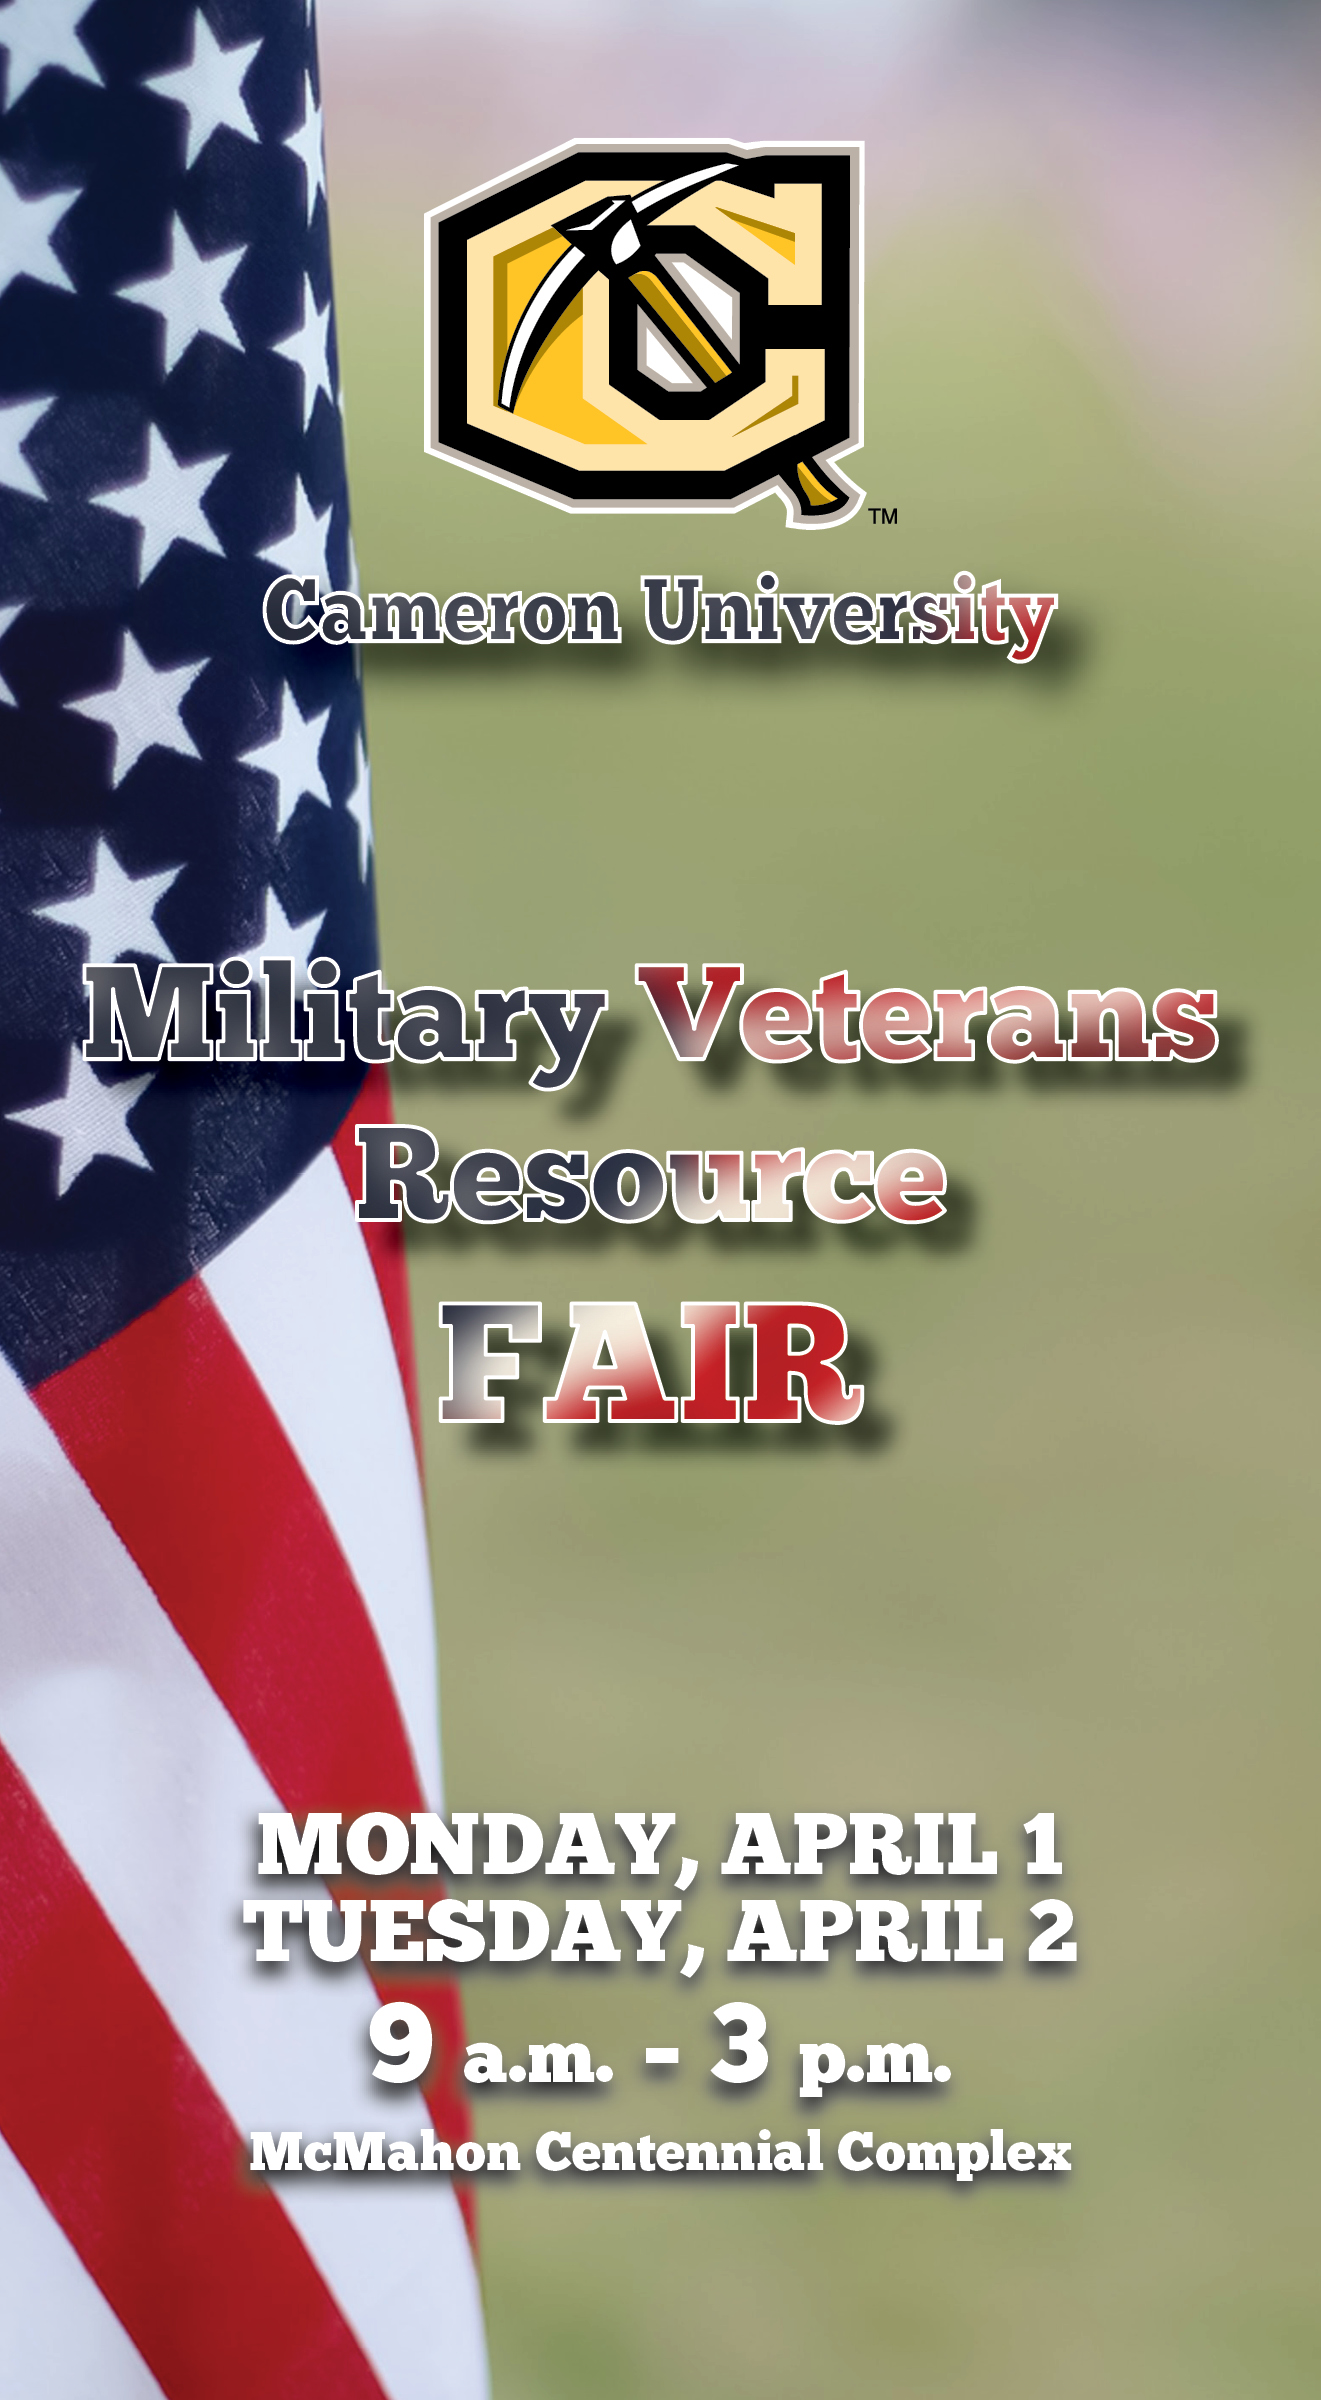 Cameron University
Military Veterans Resource Fair
Monday April 1
Tuesday April 2
9 a.m. - 3 p.m.
McMahon Centennial Complex